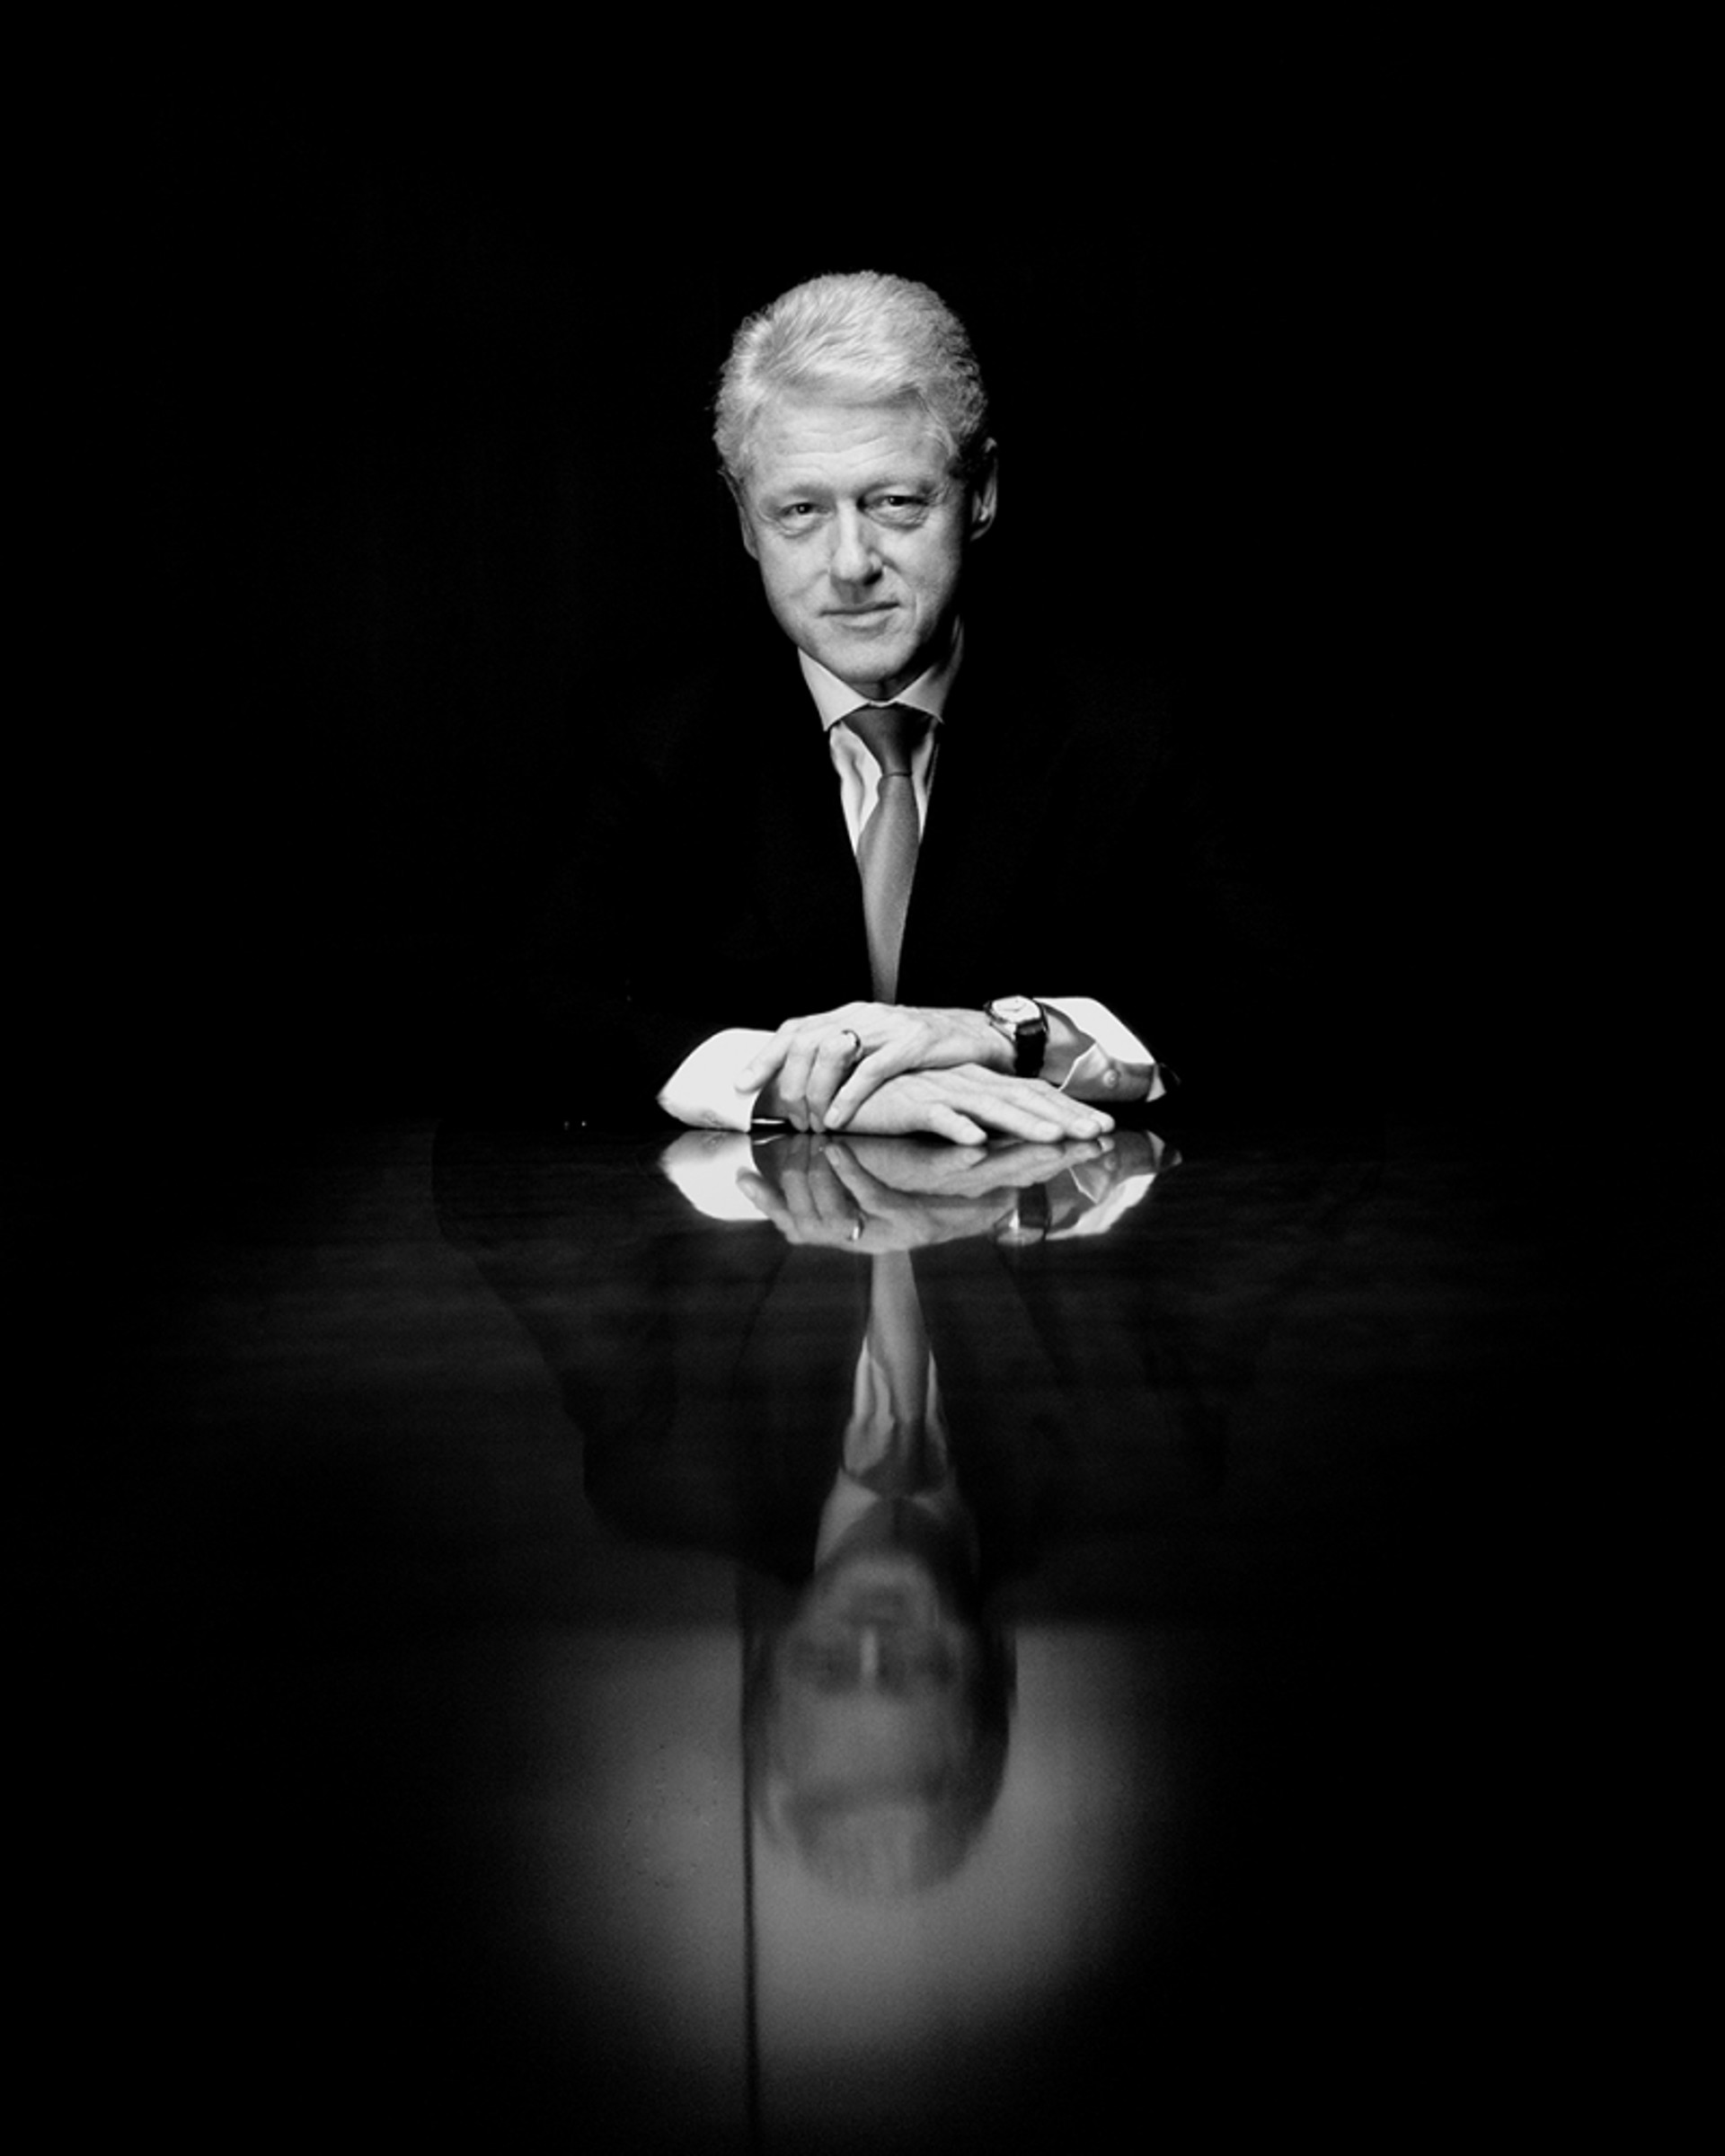 05043 Bill Clinton On Desk BW by Timothy White